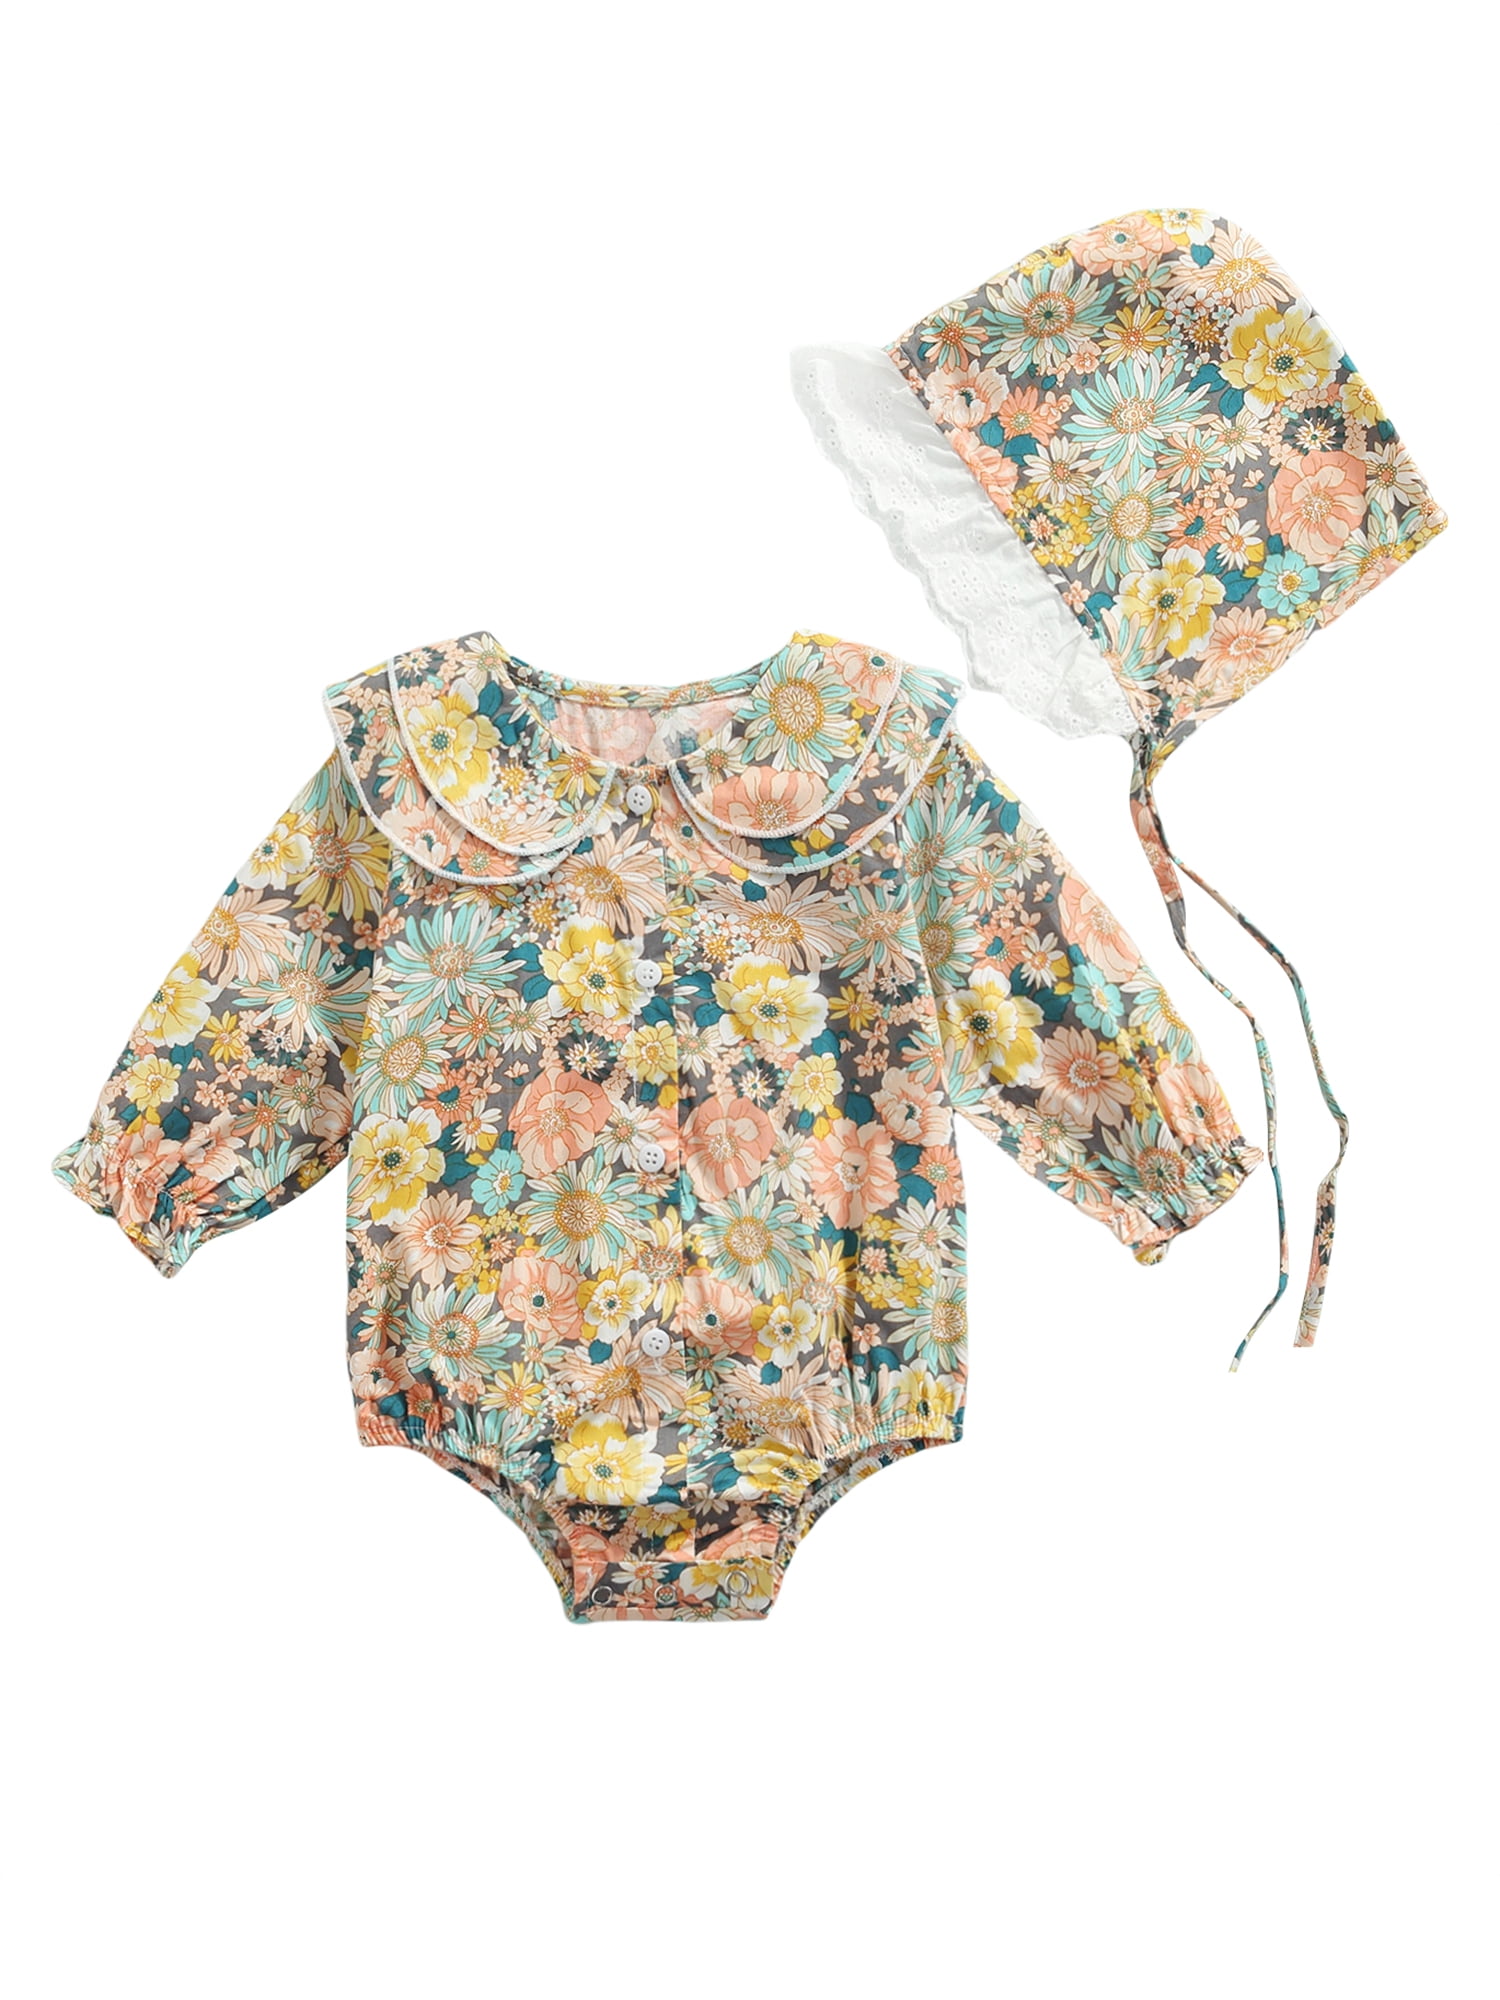 Newborn Toddler Infant Baby Girl Long Sleeve Floral Romper Jumpsuit Hat Clothes 